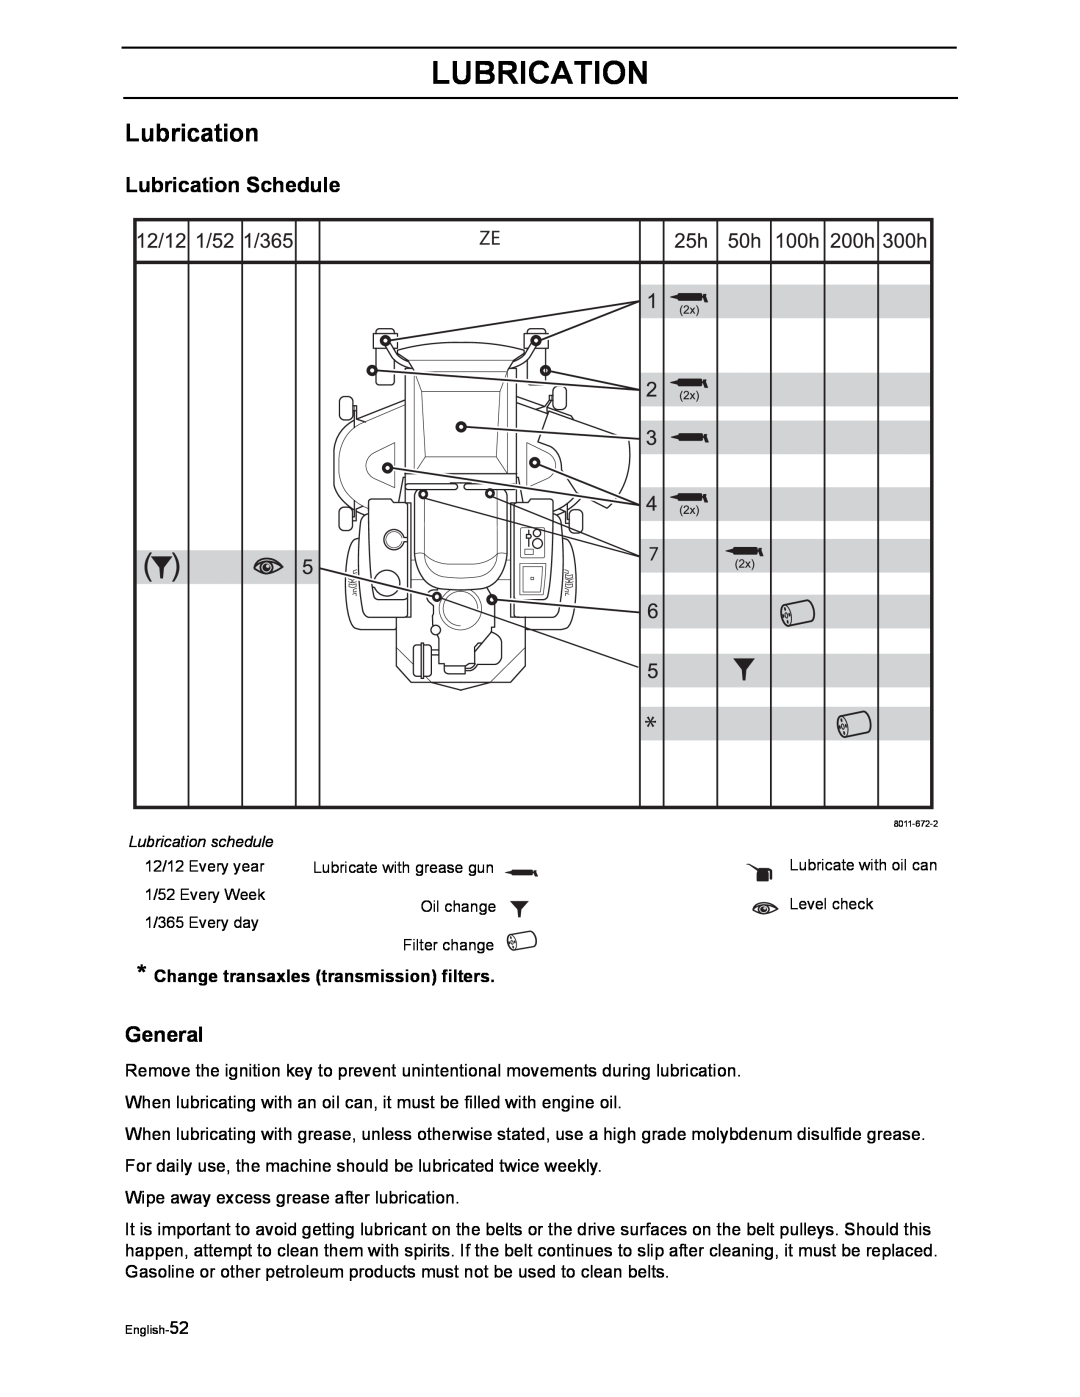 Yazoo/Kees ZEKW48190 manual Lubrication Schedule, Change transaxles transmission filters, General 